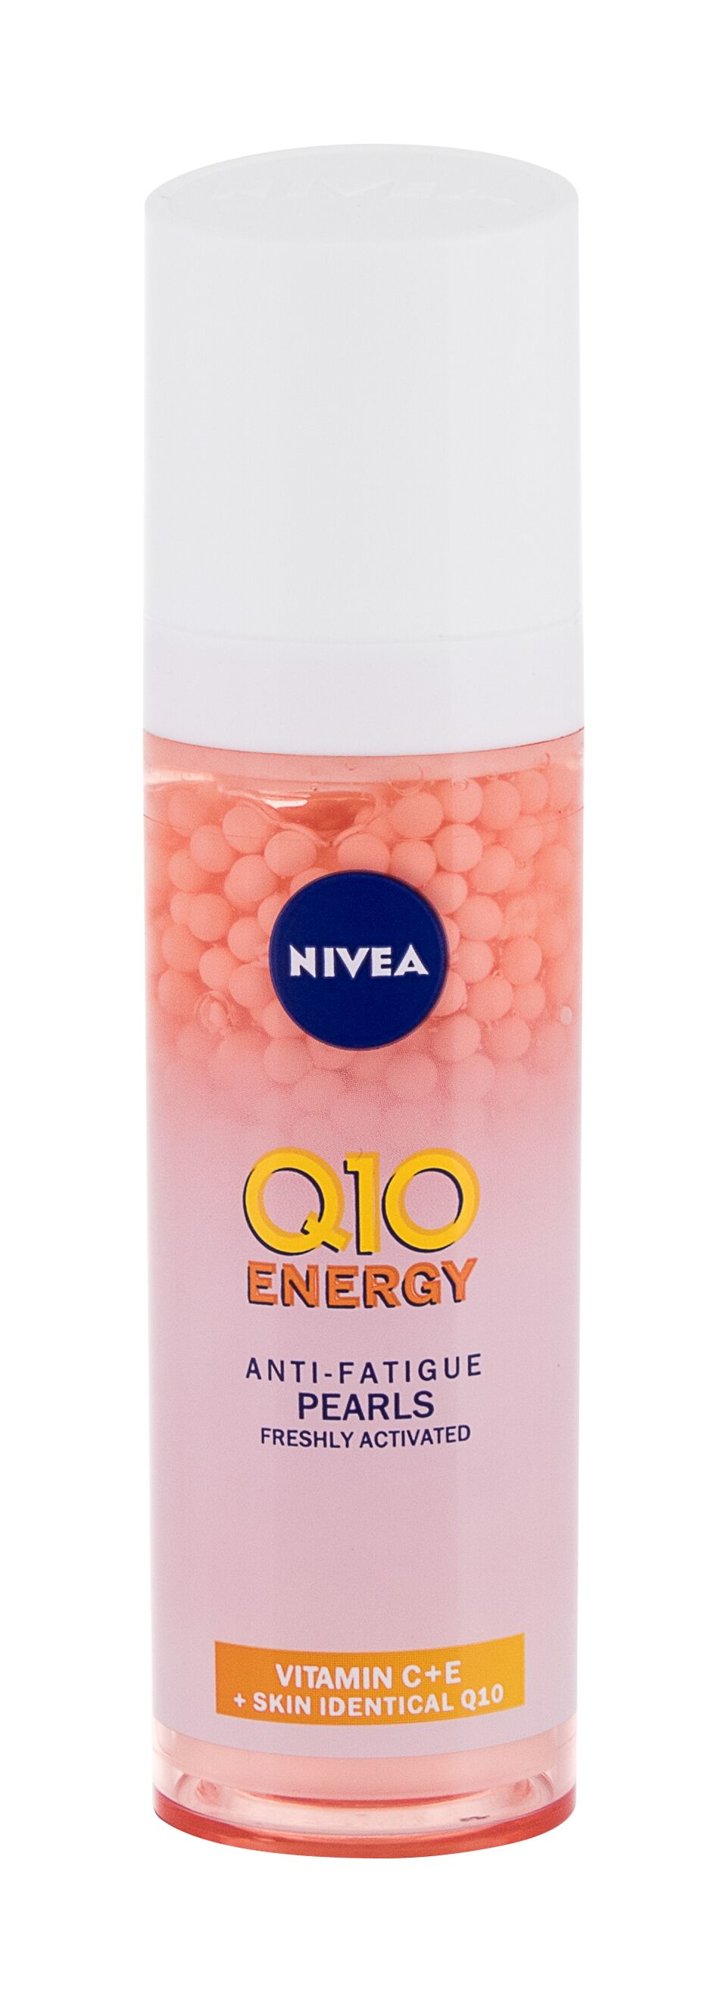 Nivea Q10 Energy Anti-Fatigue Pearls Veido serumas